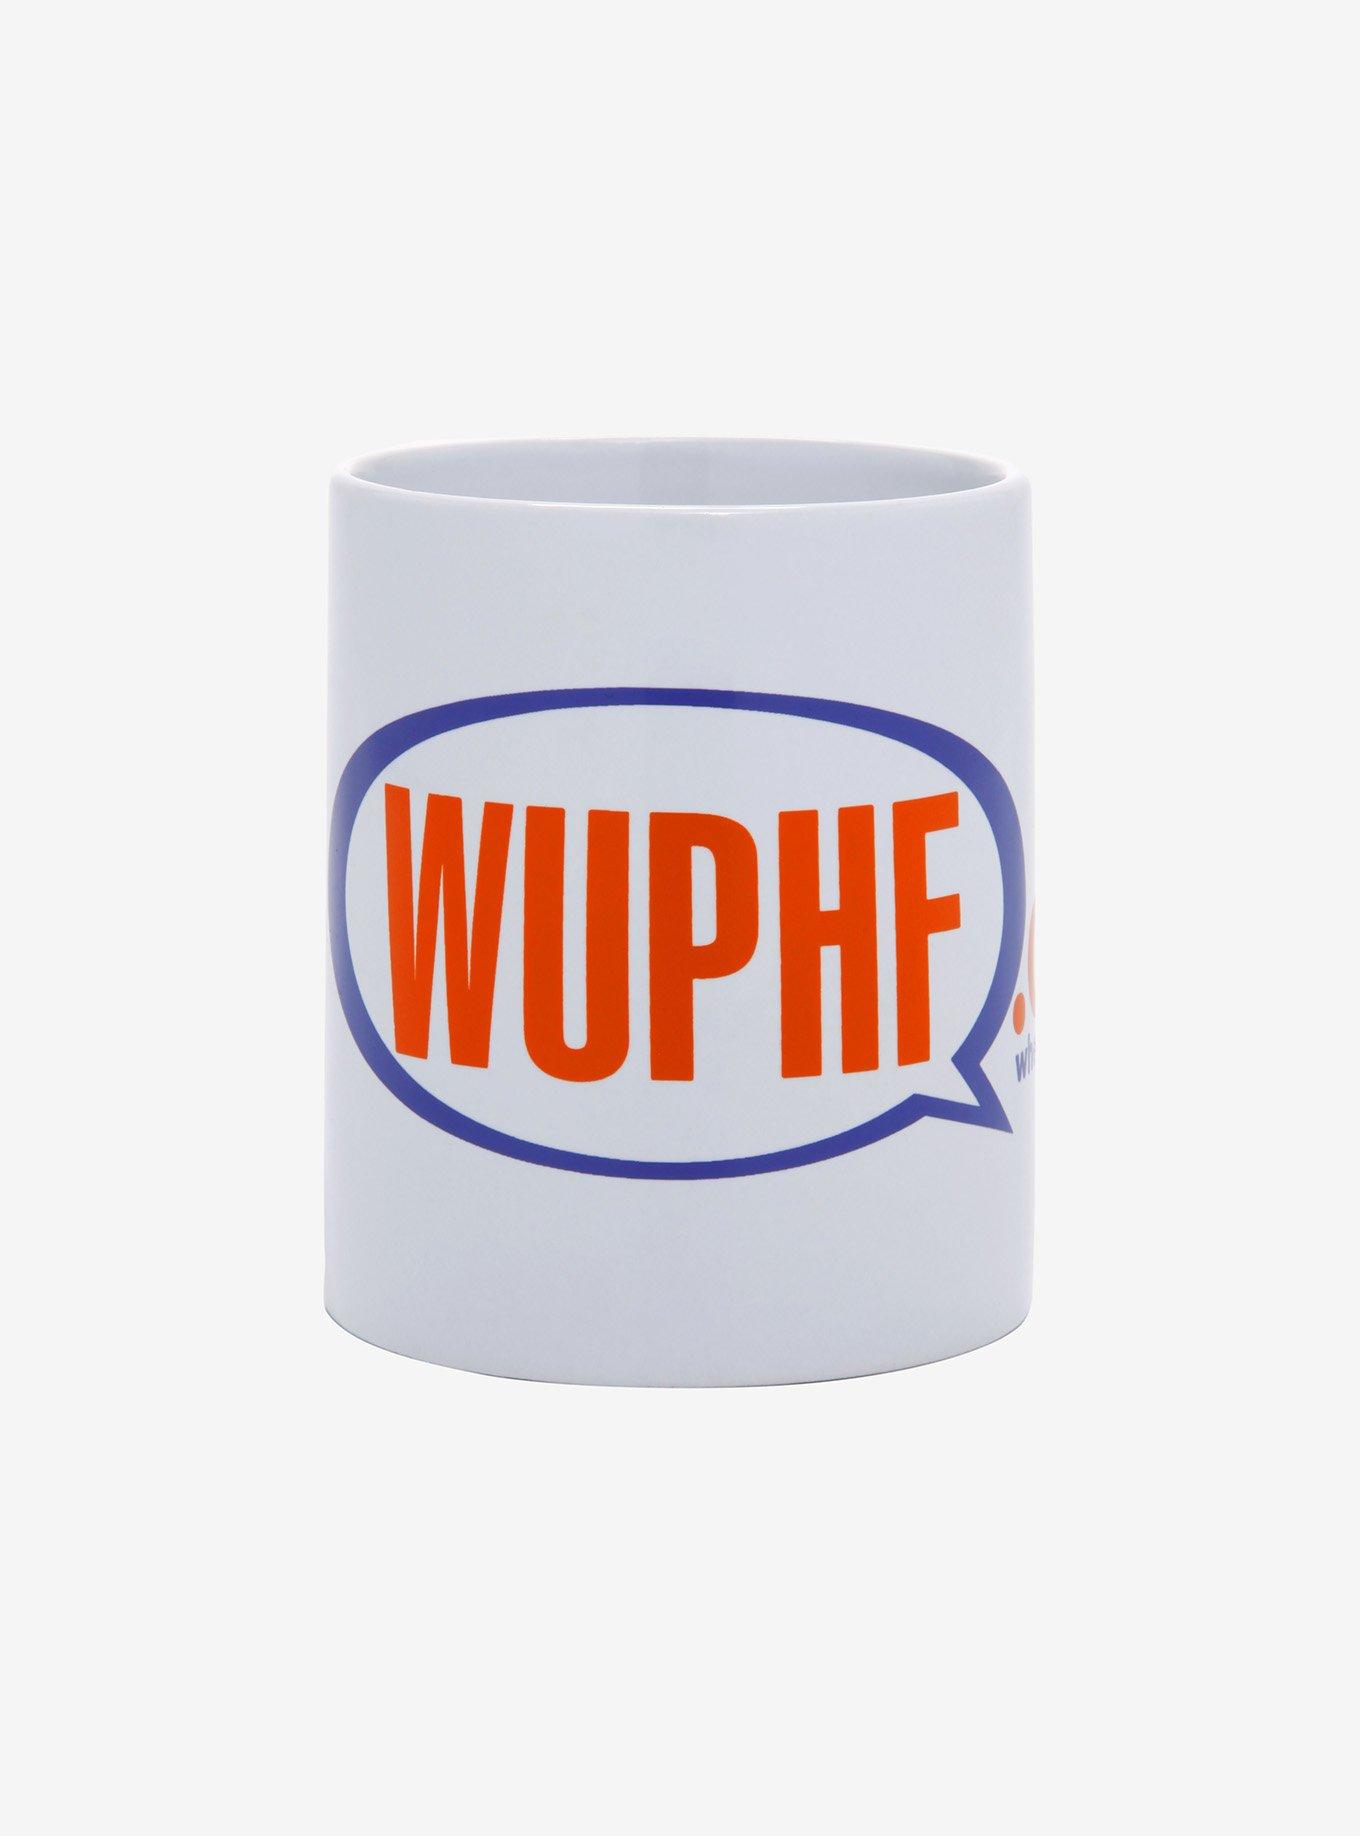 WUPHF.com